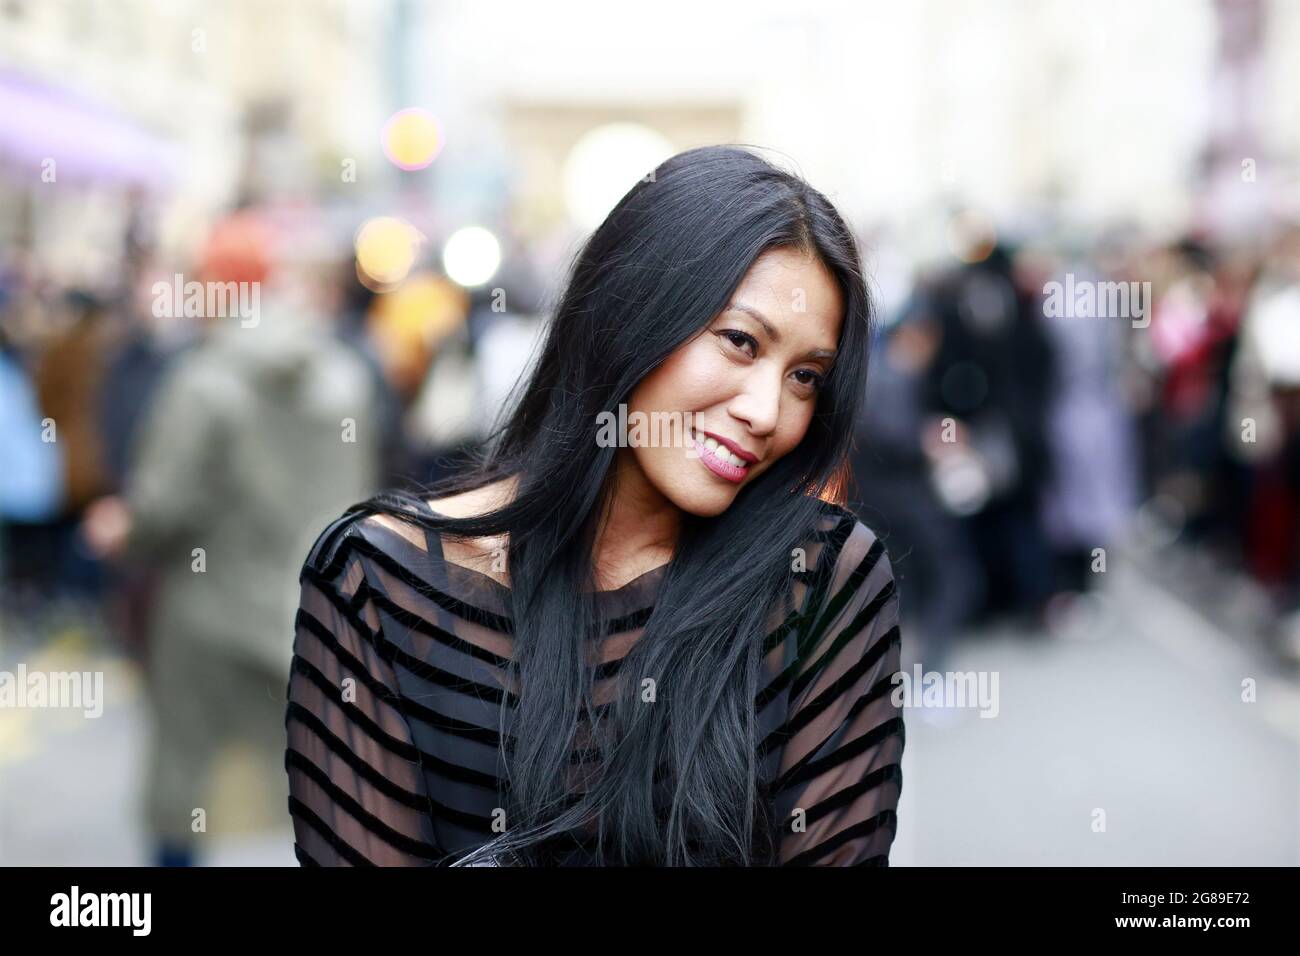 Anggun at Paris Fashion Week - Streetstyle - France Stock Photo